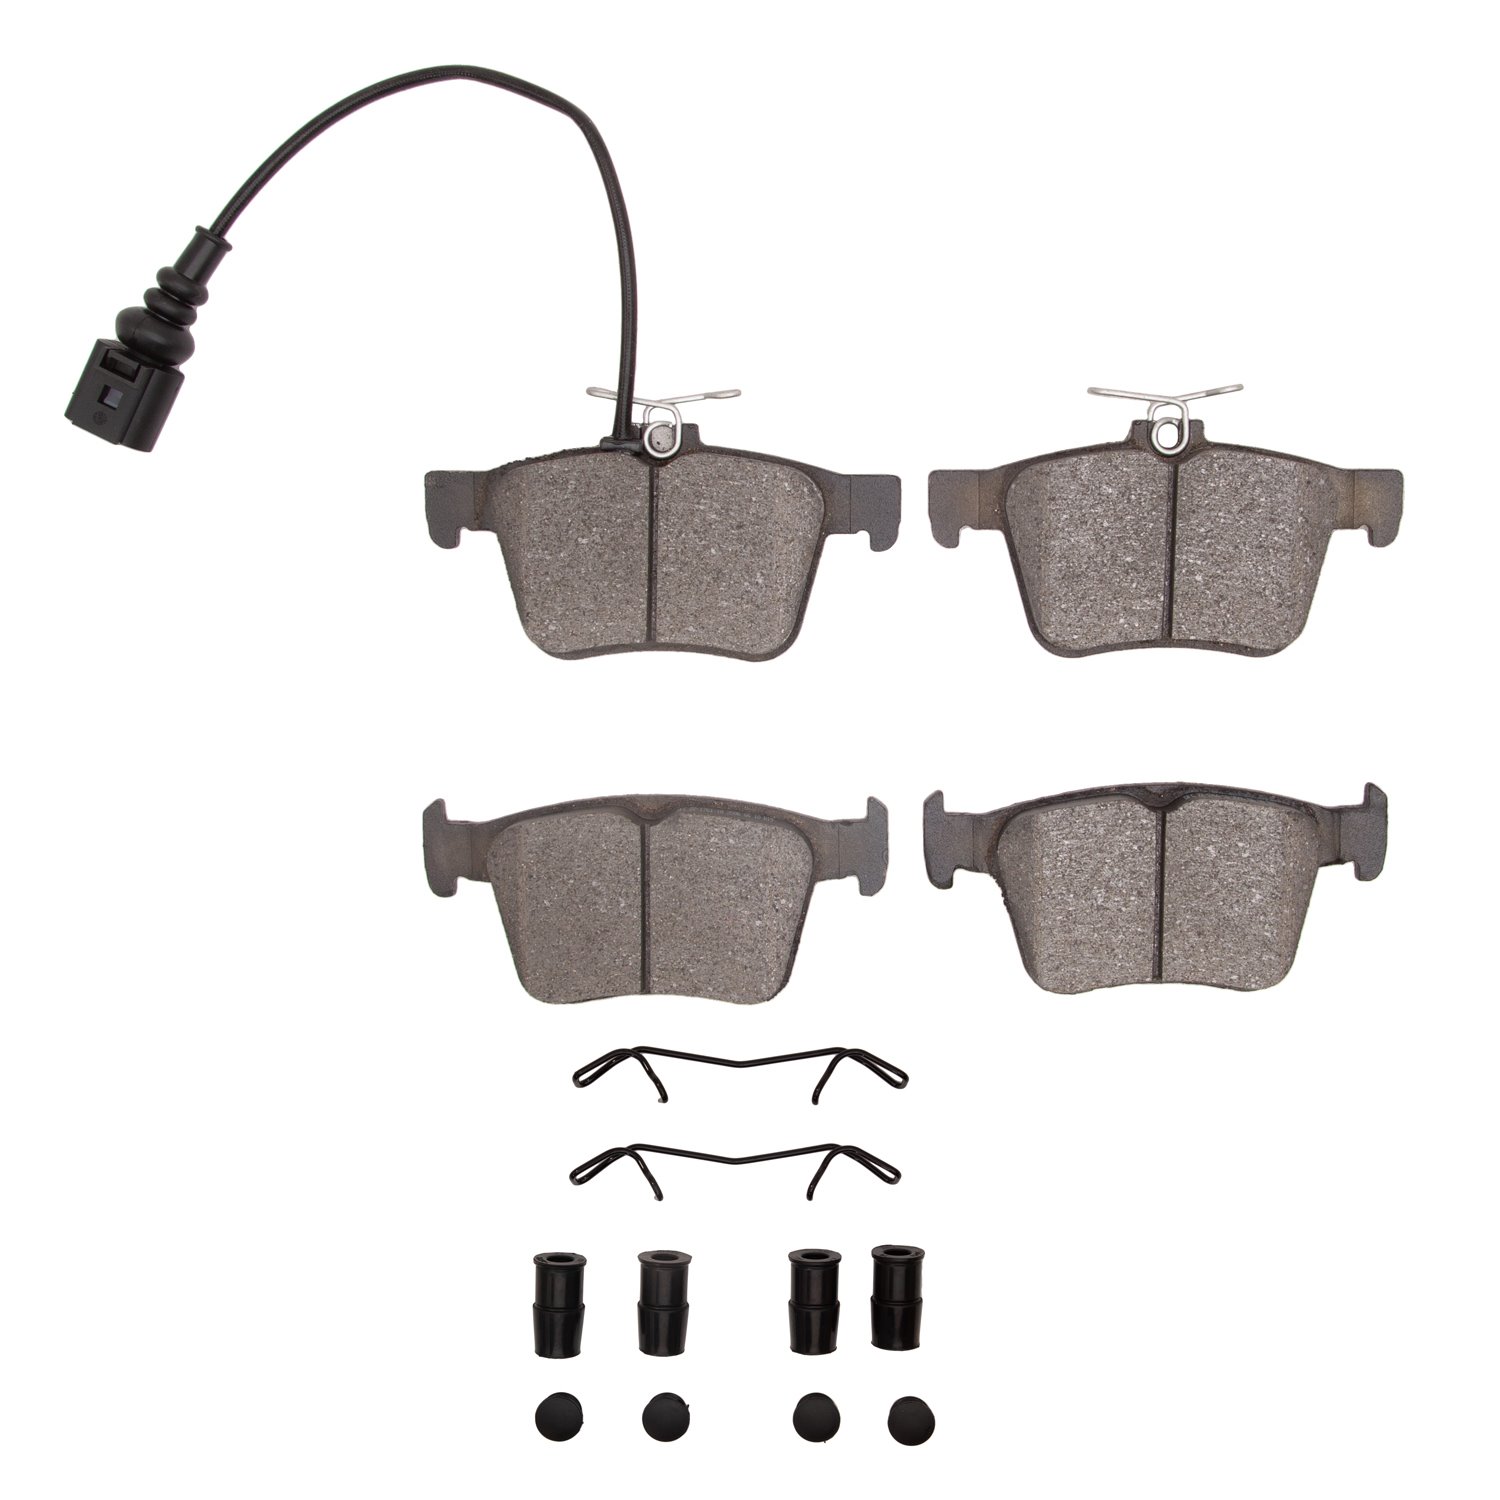 Euro Ceramic Brake Pads & Hardware Kit, Fits Select Audi/Porsche/Volkswagen, Position: Rear